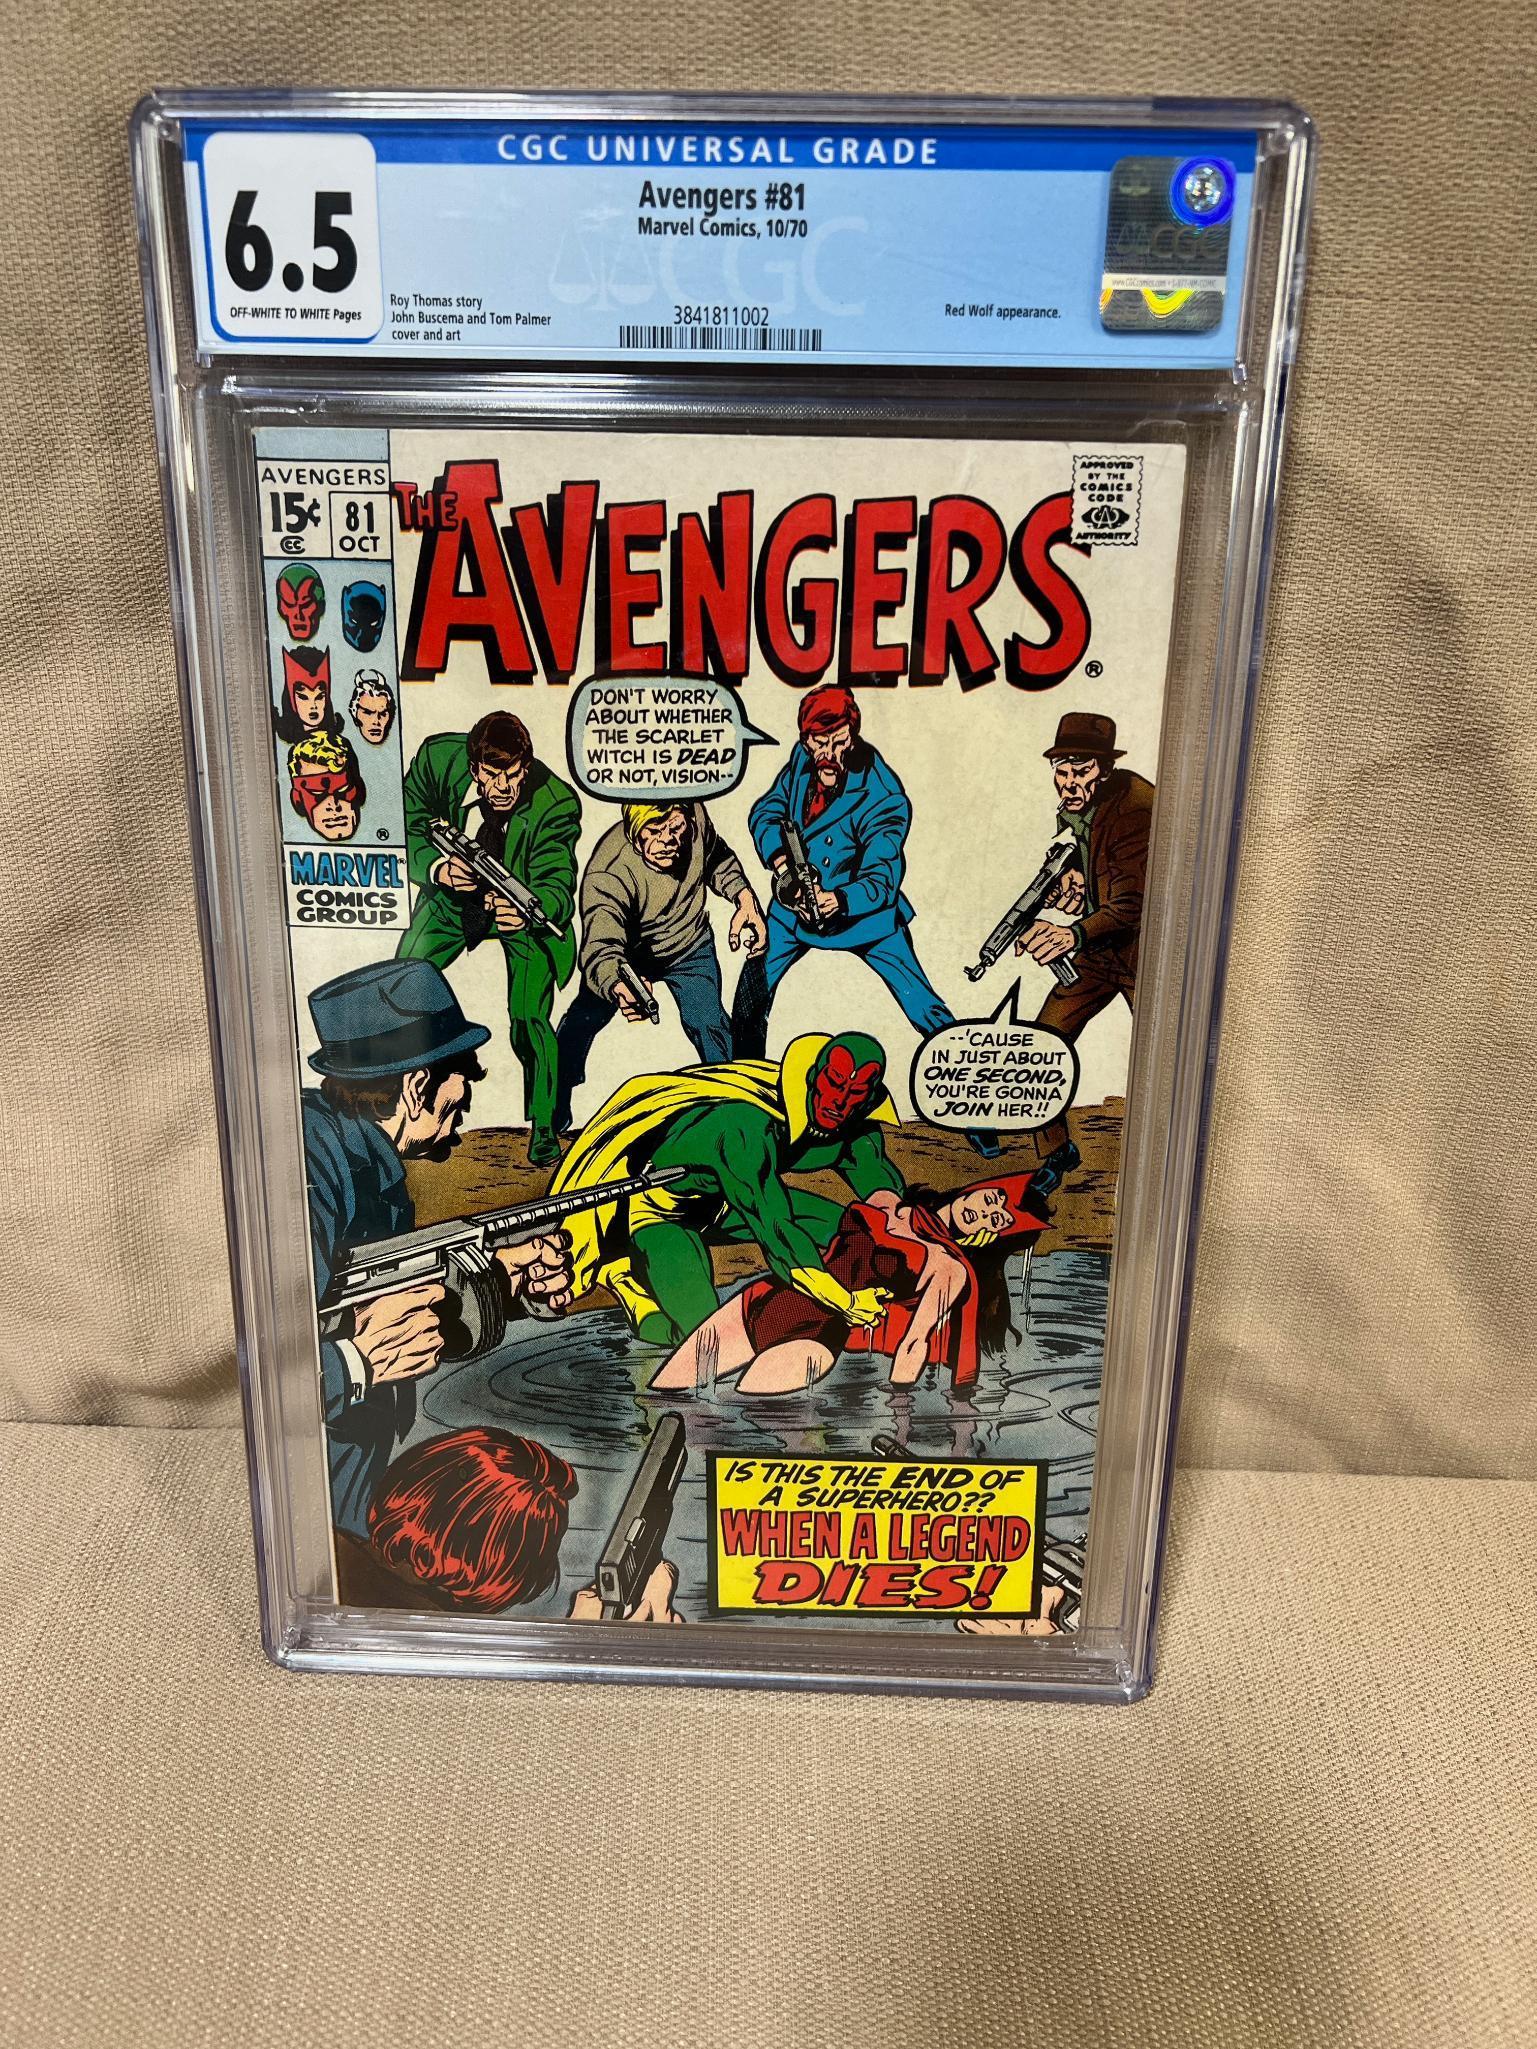 AUCTION SPOTLIGHT! Marvel Comics The Avengers no. 81 graded 6.5 in CGC holder